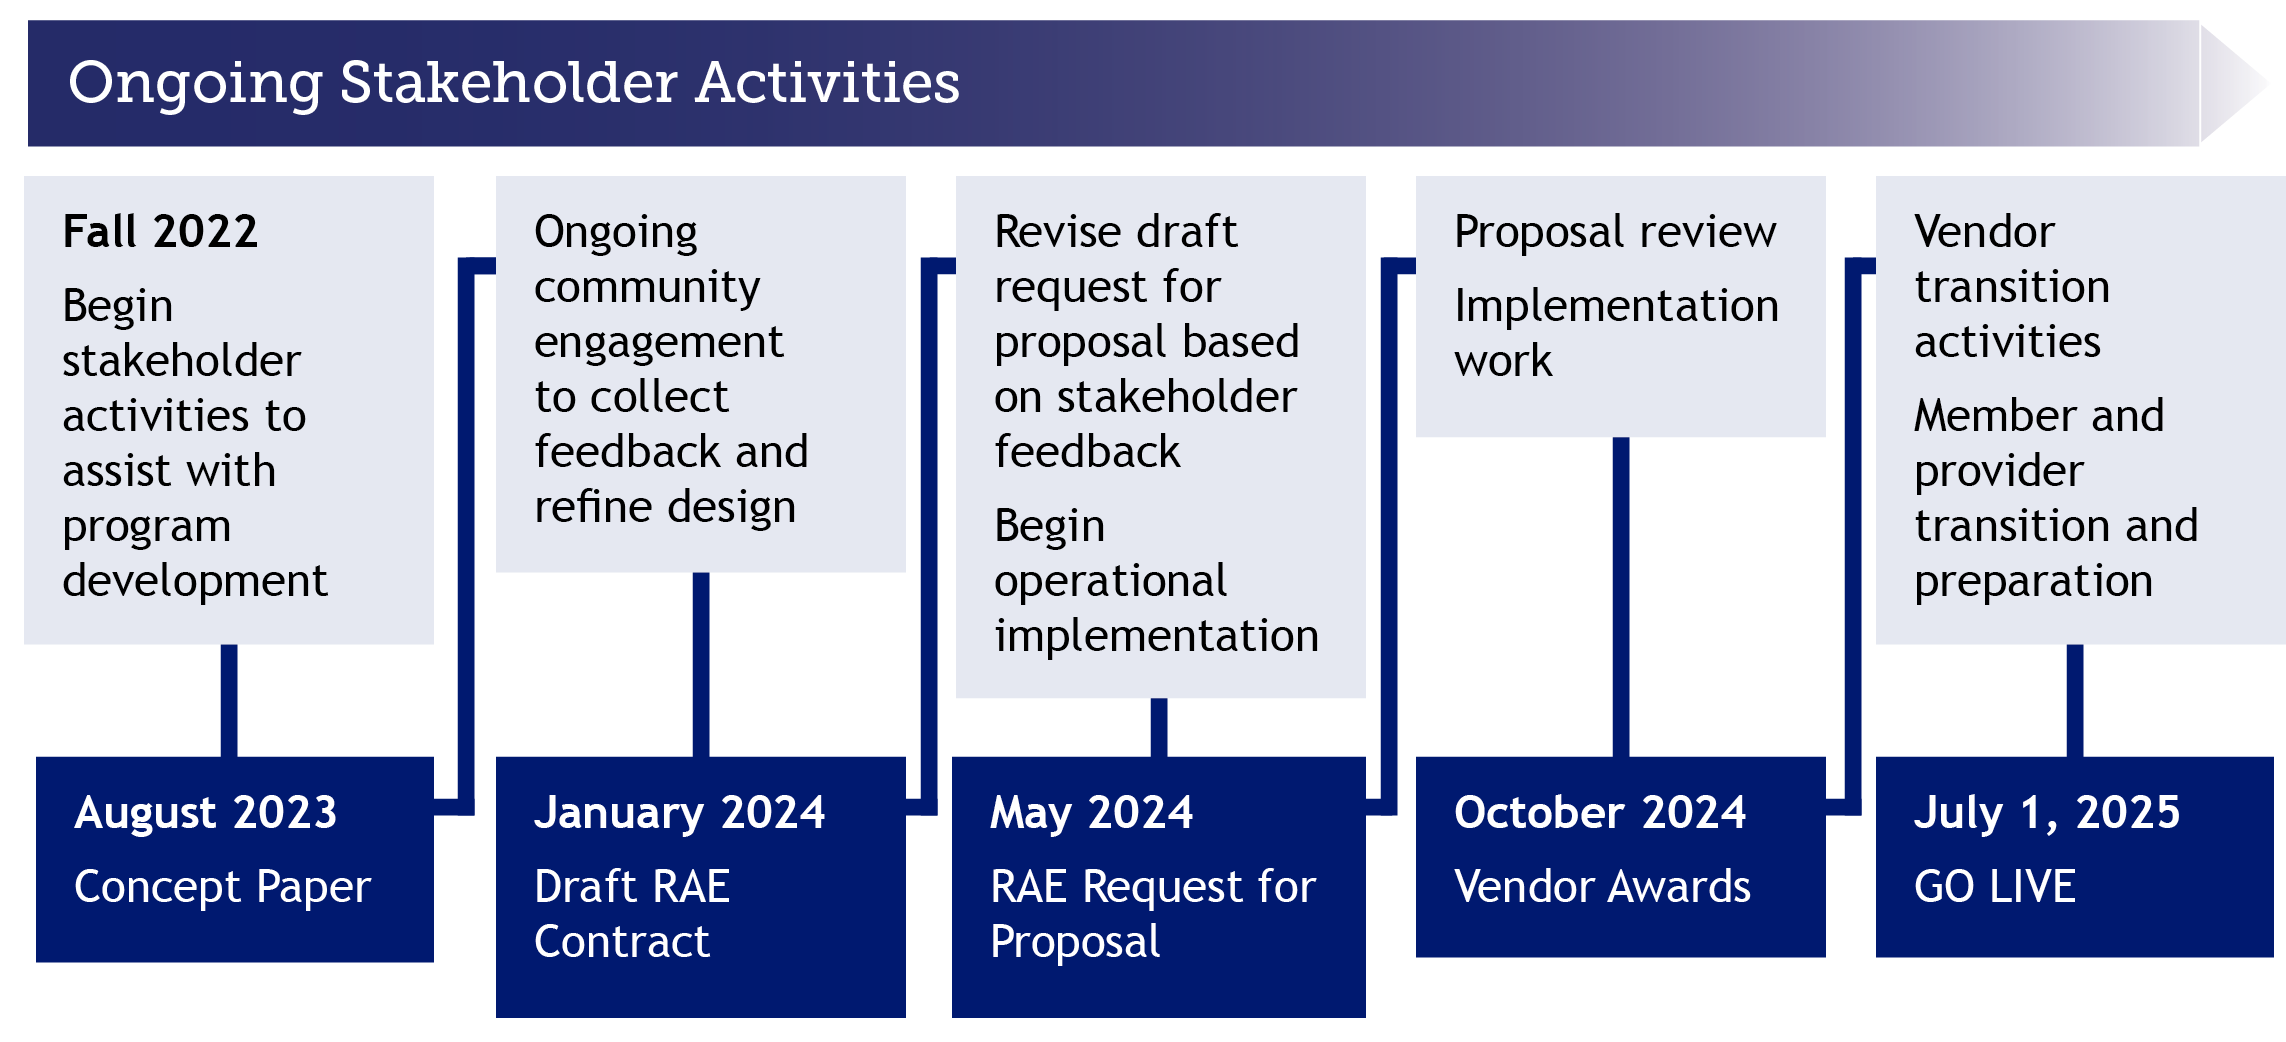 ACC Phase III Ongoing Stakeholder Activities Timeline